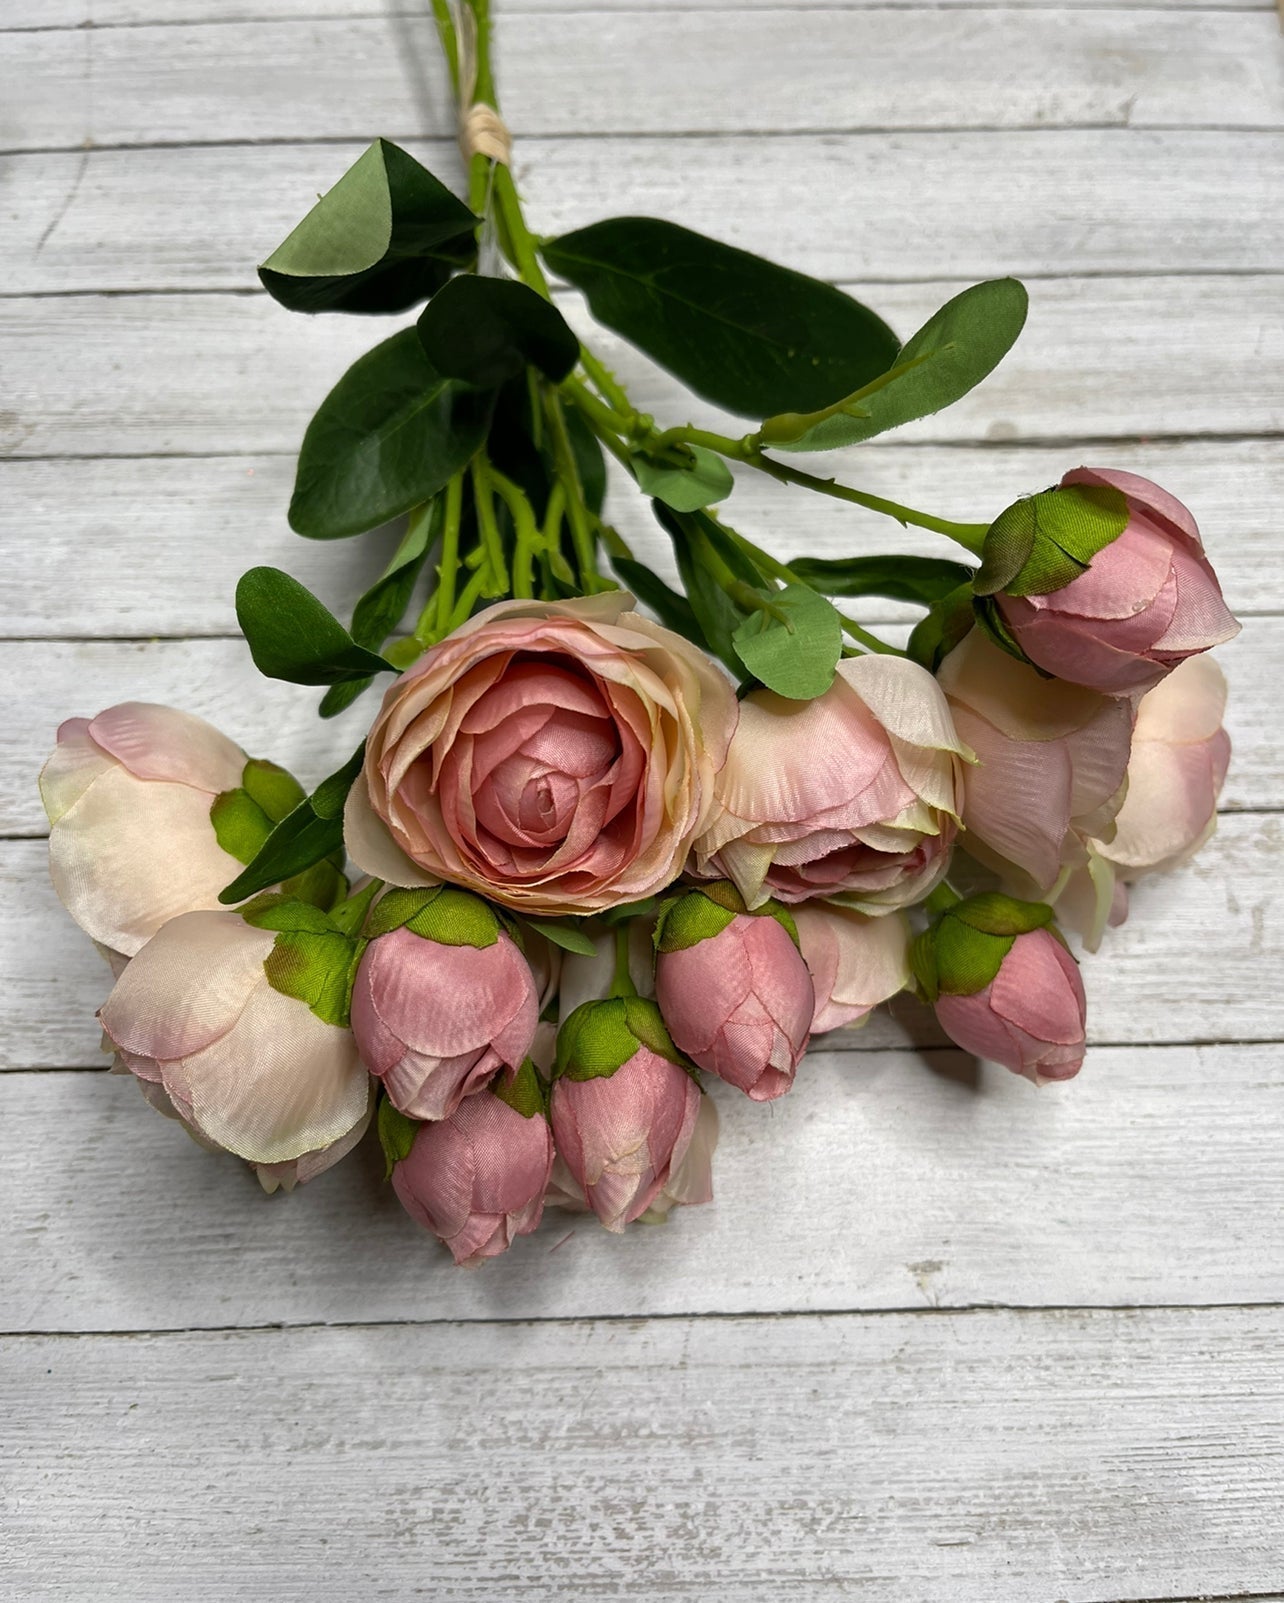 Antique Pink ranunculus bundle - Greenery Marketartificial flowers26033